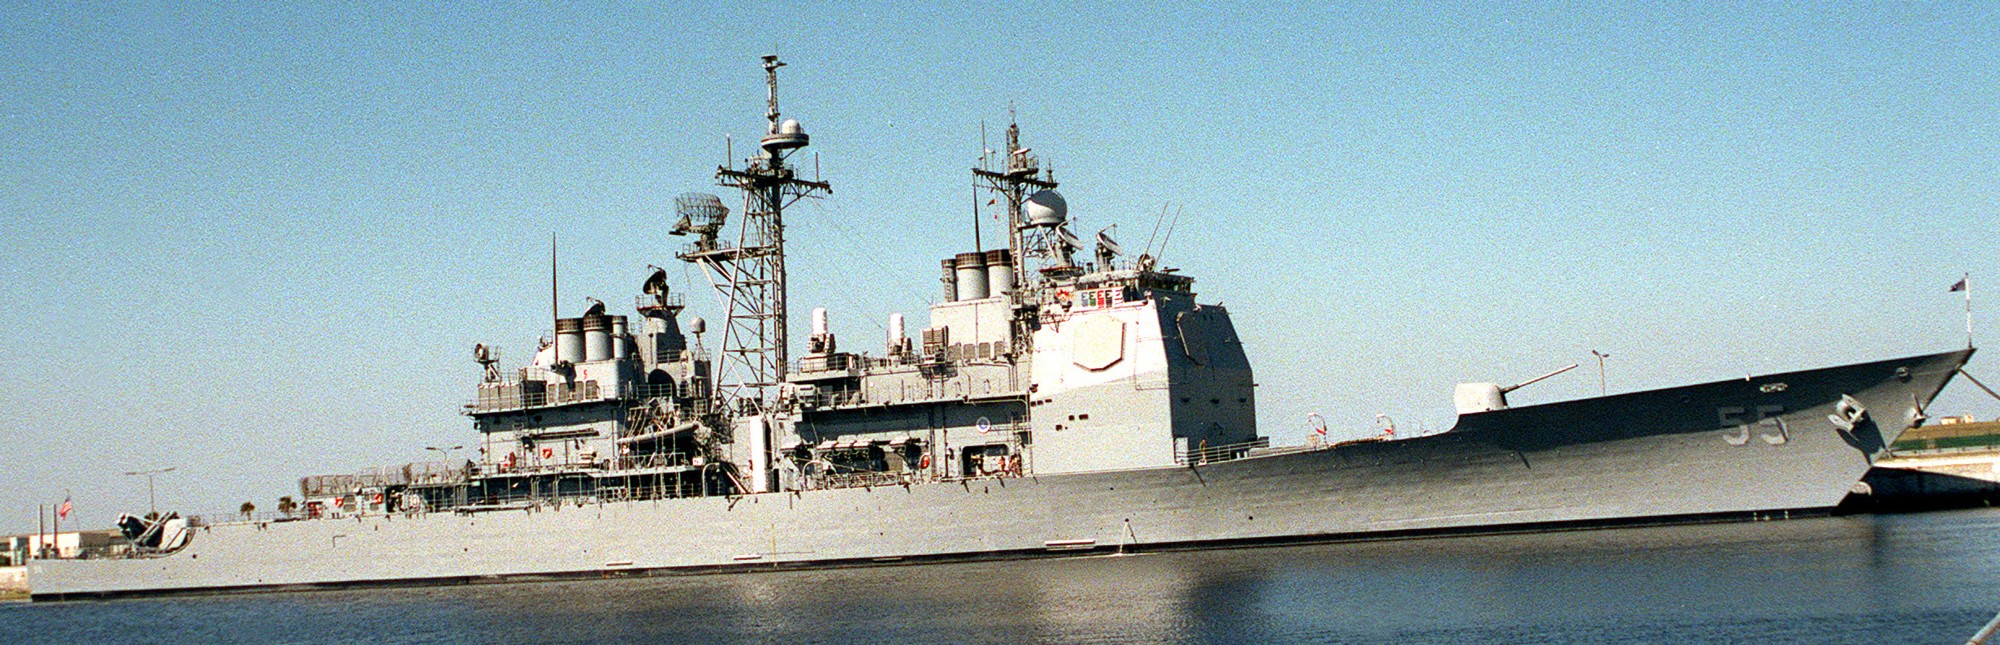 cg-55 uss leyte gulf ticonderoga class guided missile cruiser aegis us navy naval station mayport florida 19